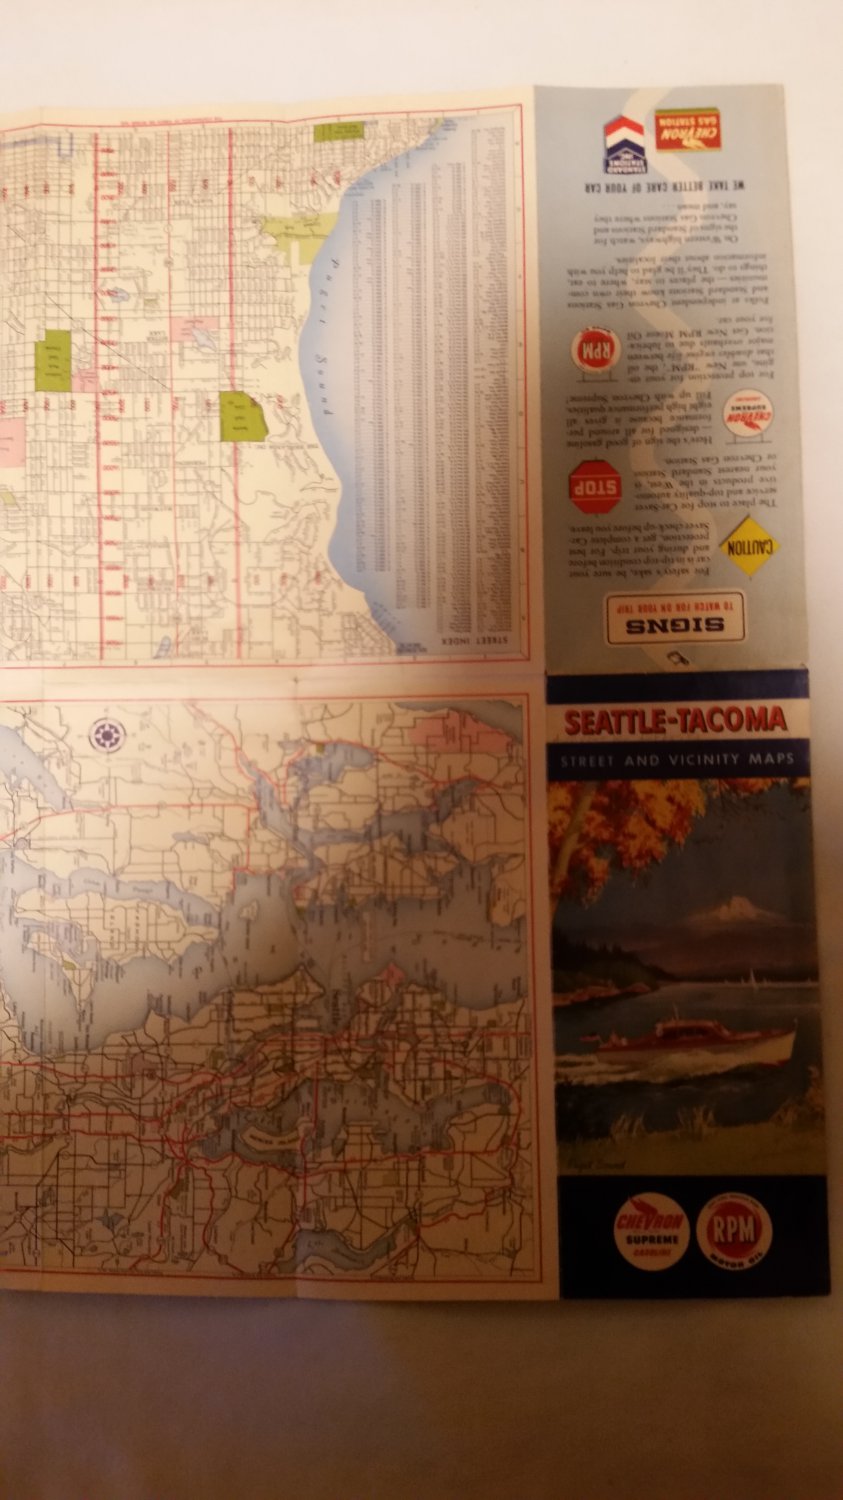 Vintage Seattle- Tacoma Street & Vicinity Maps